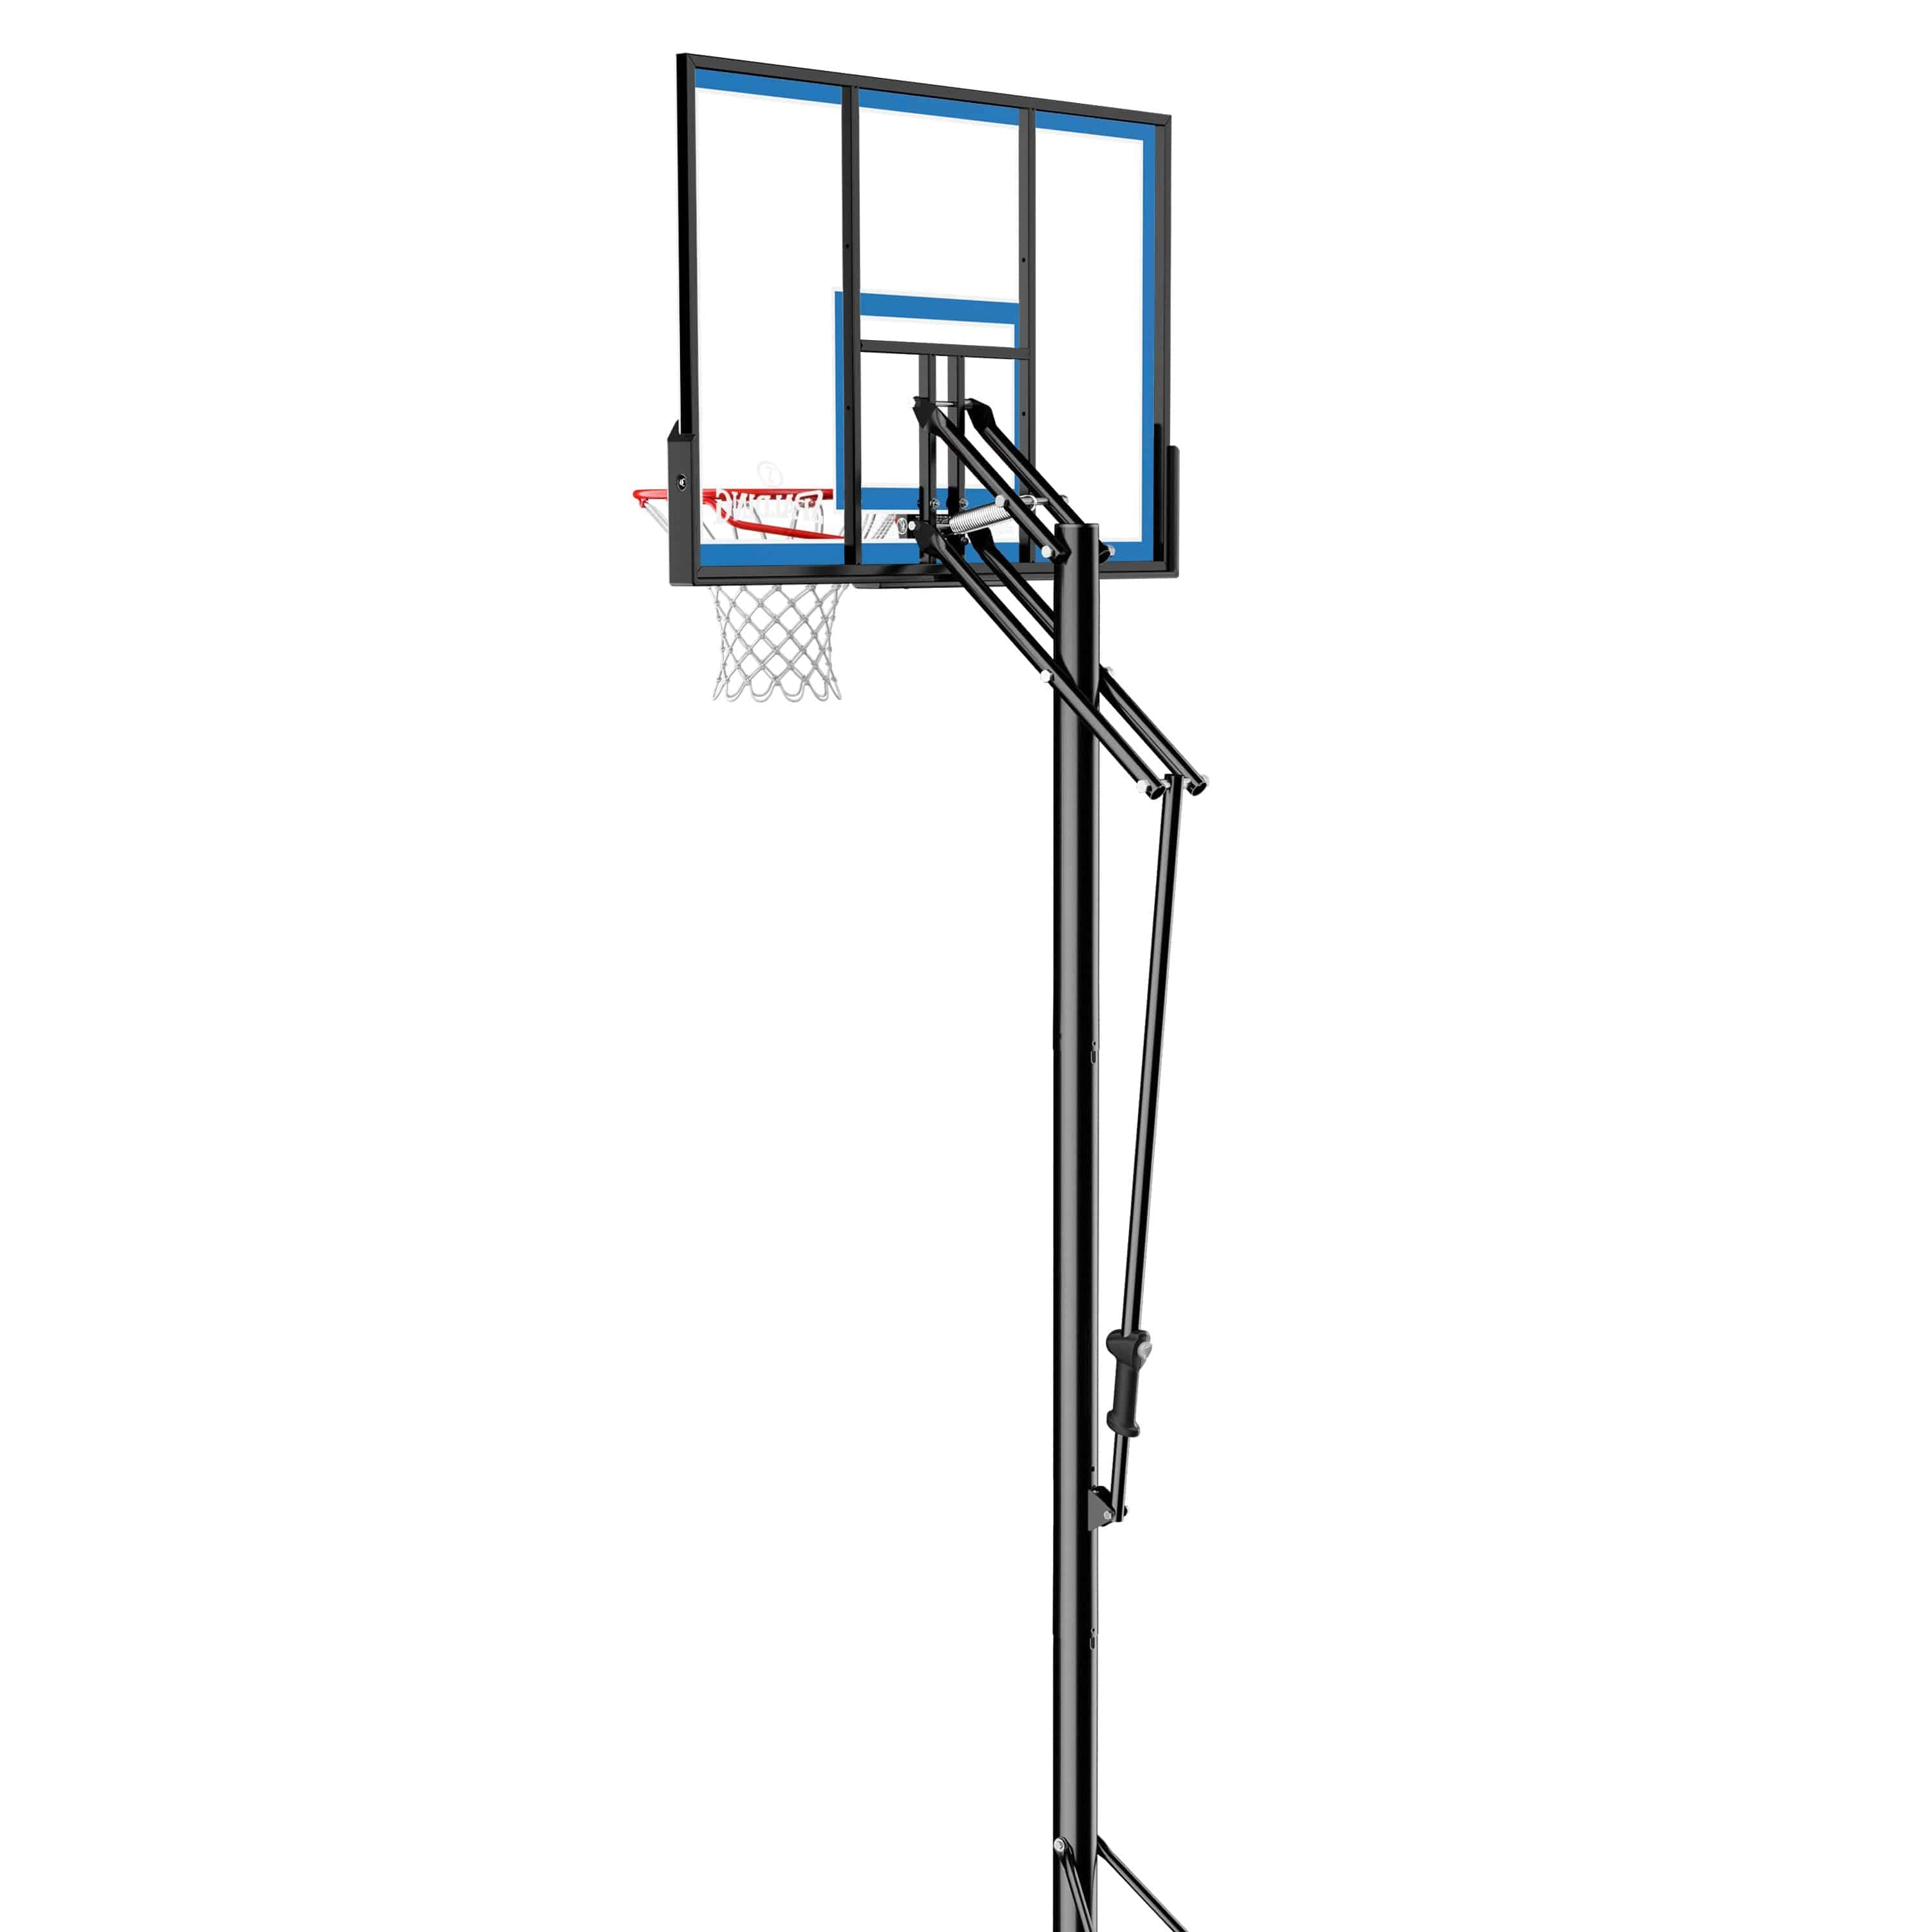 Spalding Polycarbonate Backboard Portable Basketball Systems